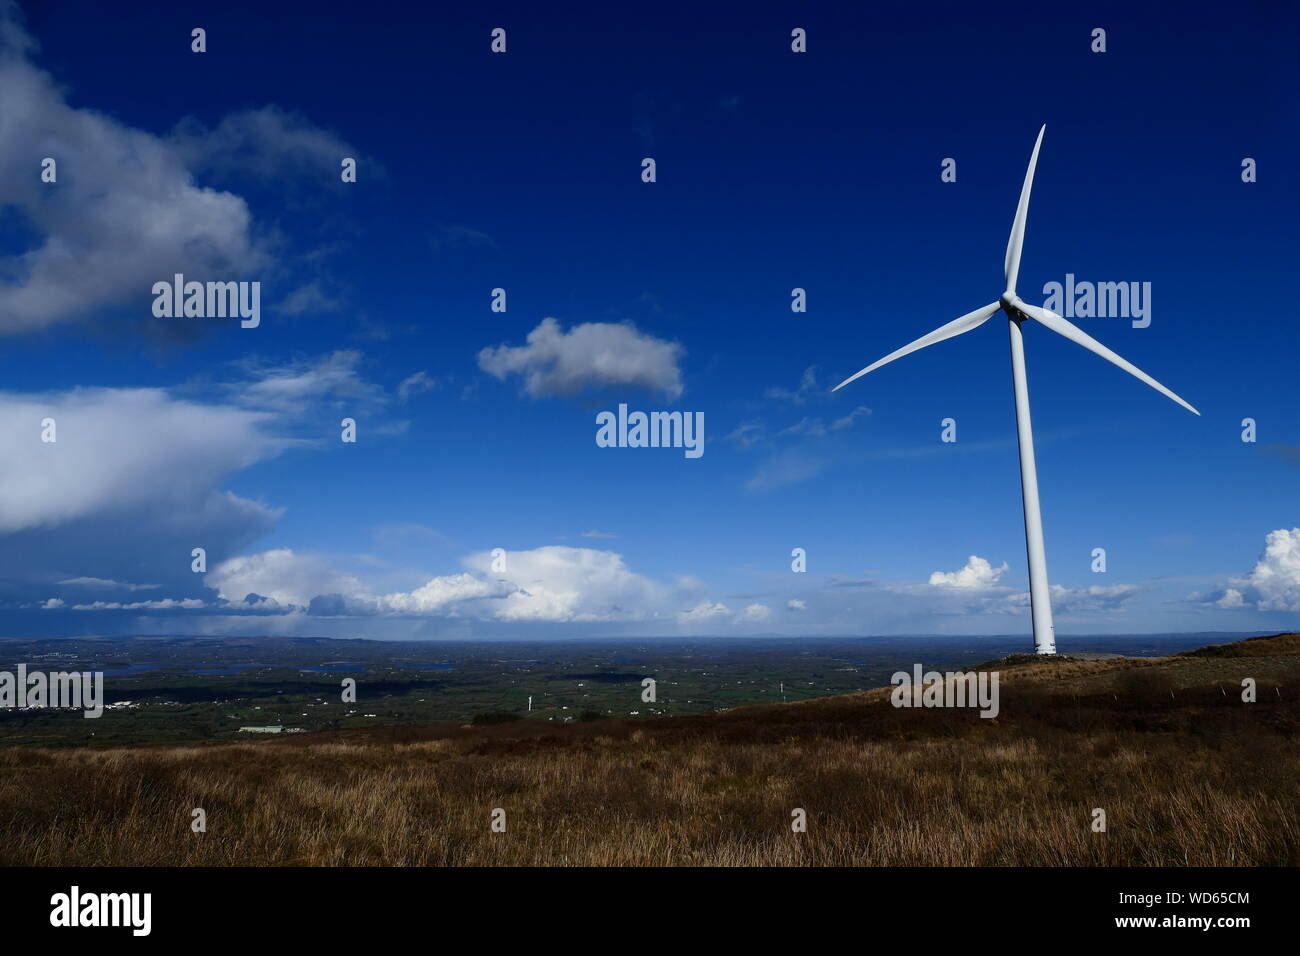 Wind Turbine On Landscape Against Blue Sky Stock Photo